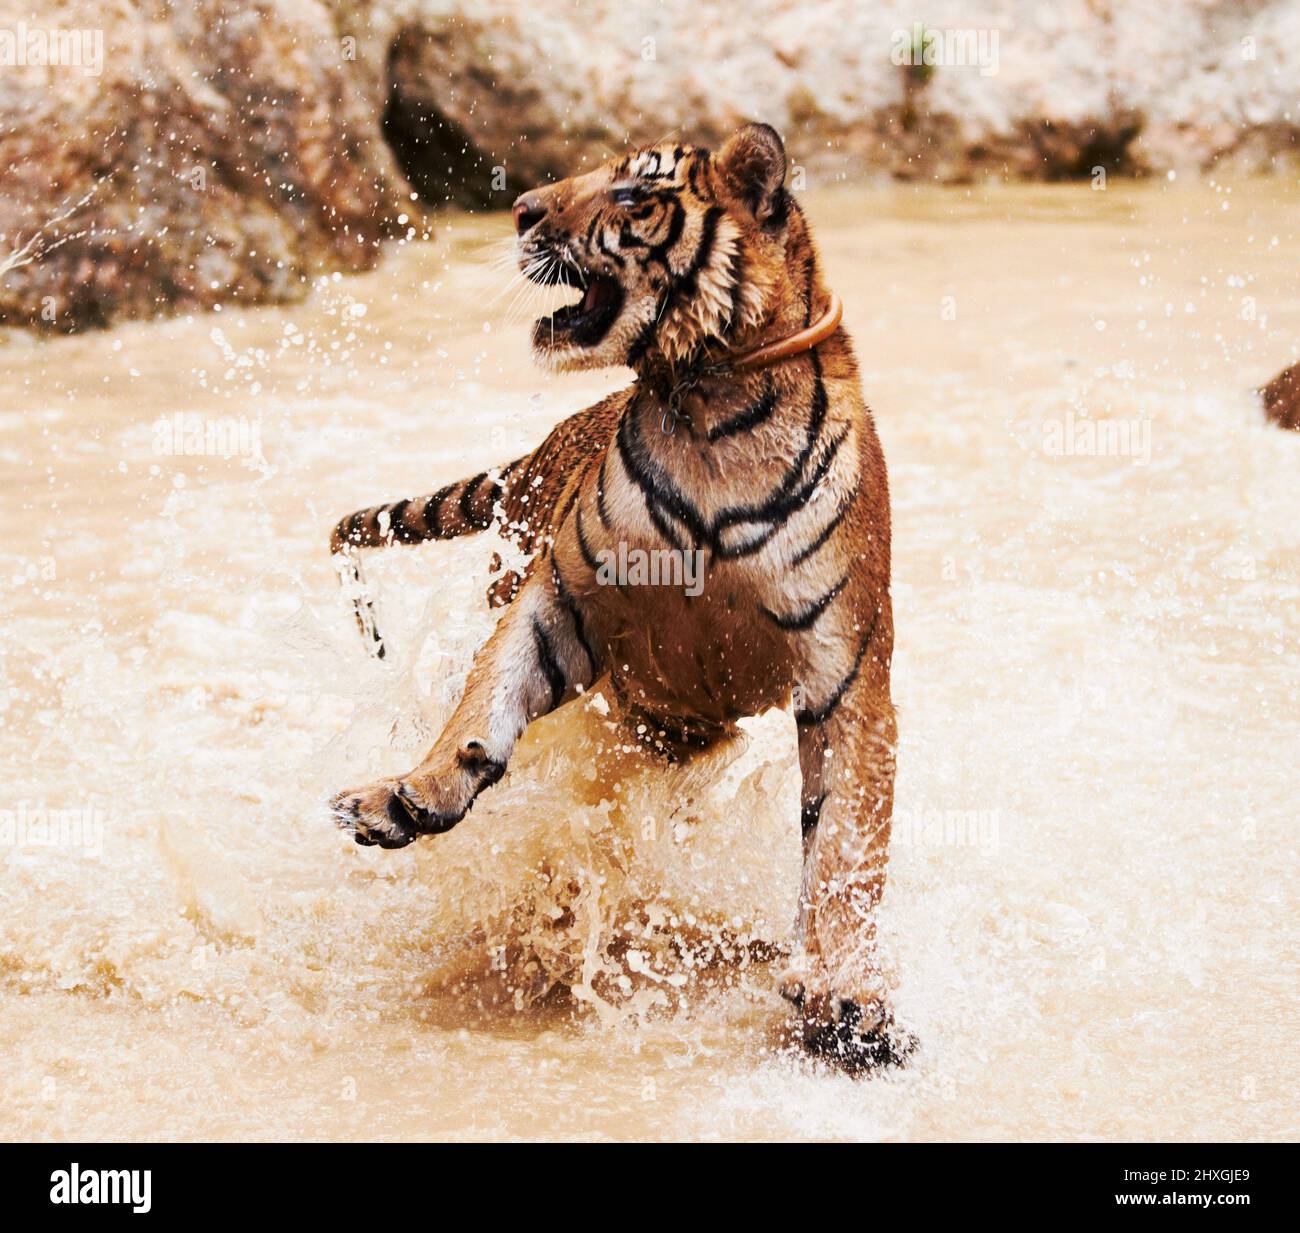 Playful tiger splashing around. Tiger playfully splashes around in the water. Stock Photo